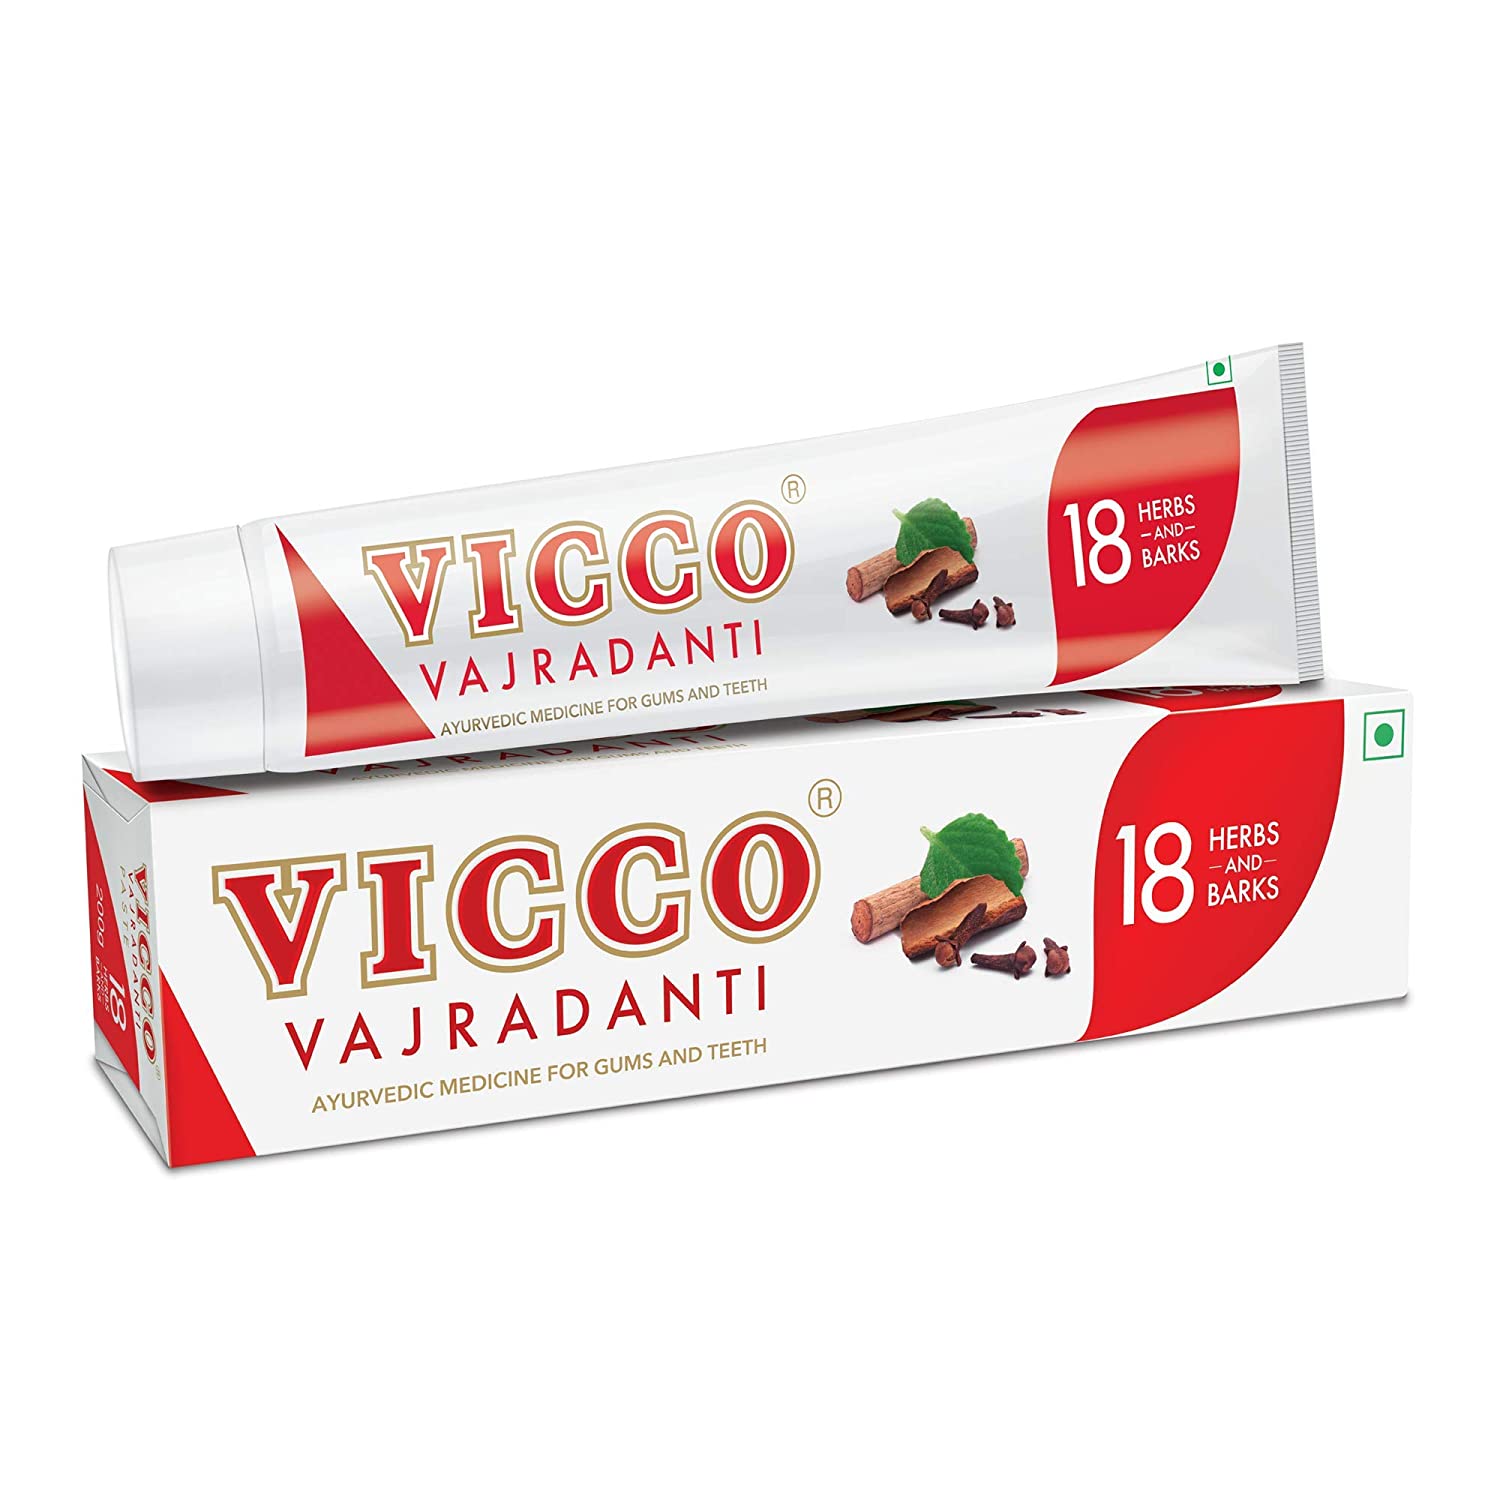 Vicco Vajradanti Ayurvedic Medicine Toothpaste for Gums and Teeth